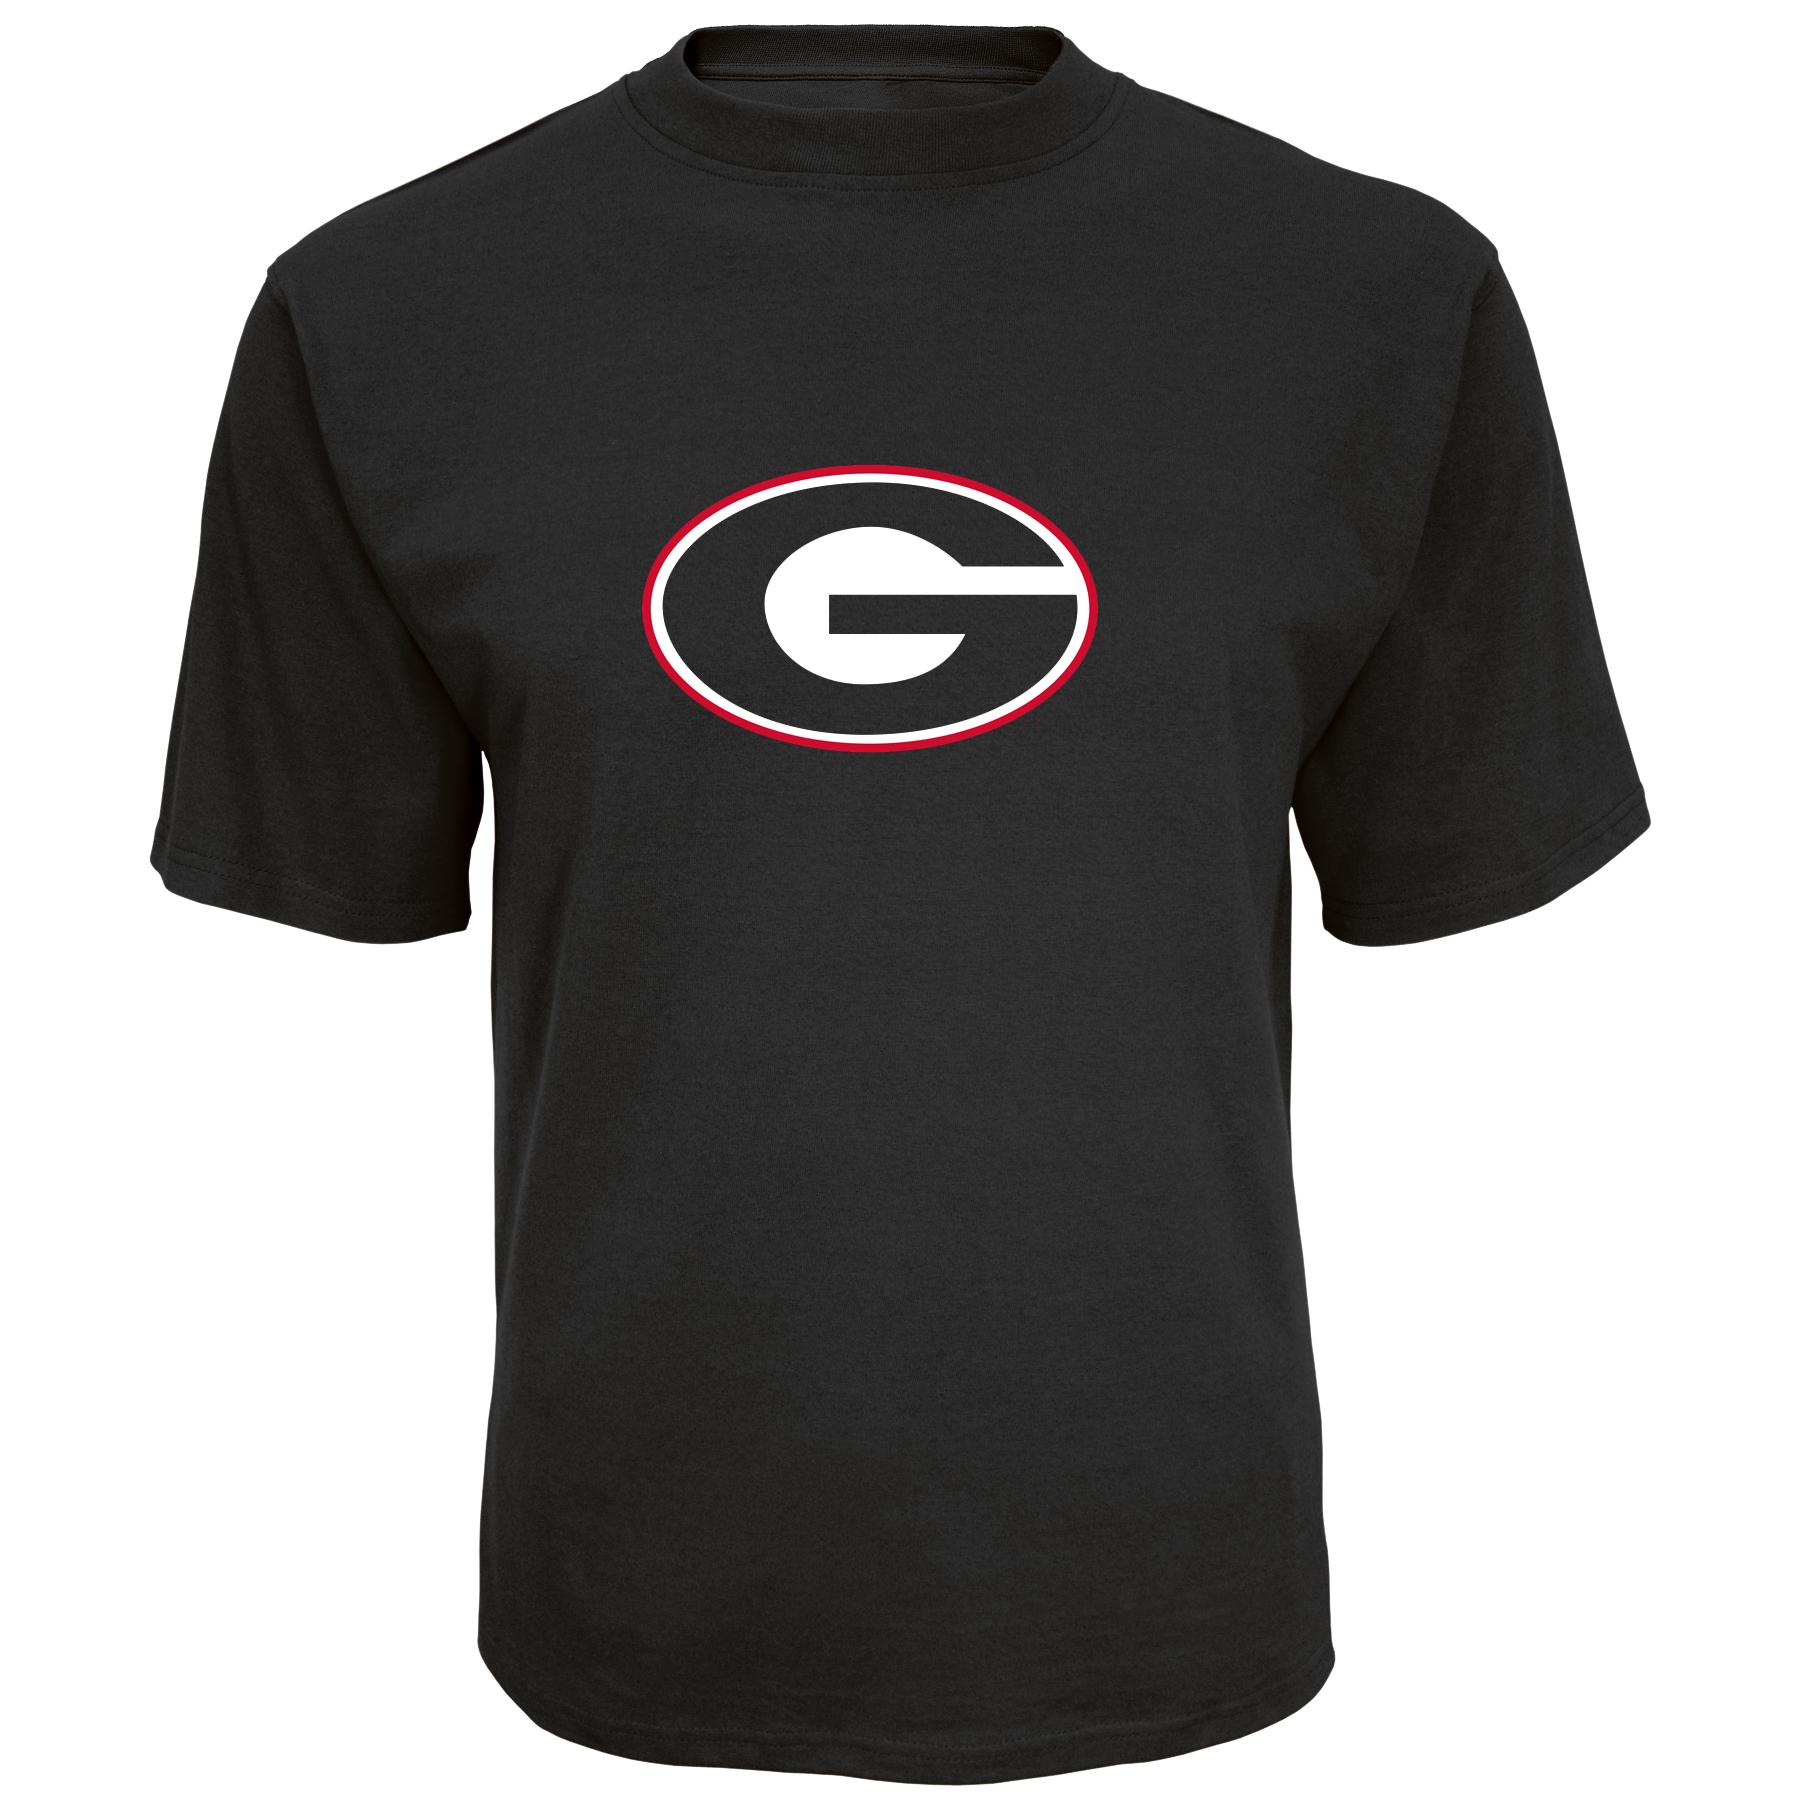 NCAA Men's Graphic T-Shirt - Georgia Bulldogs